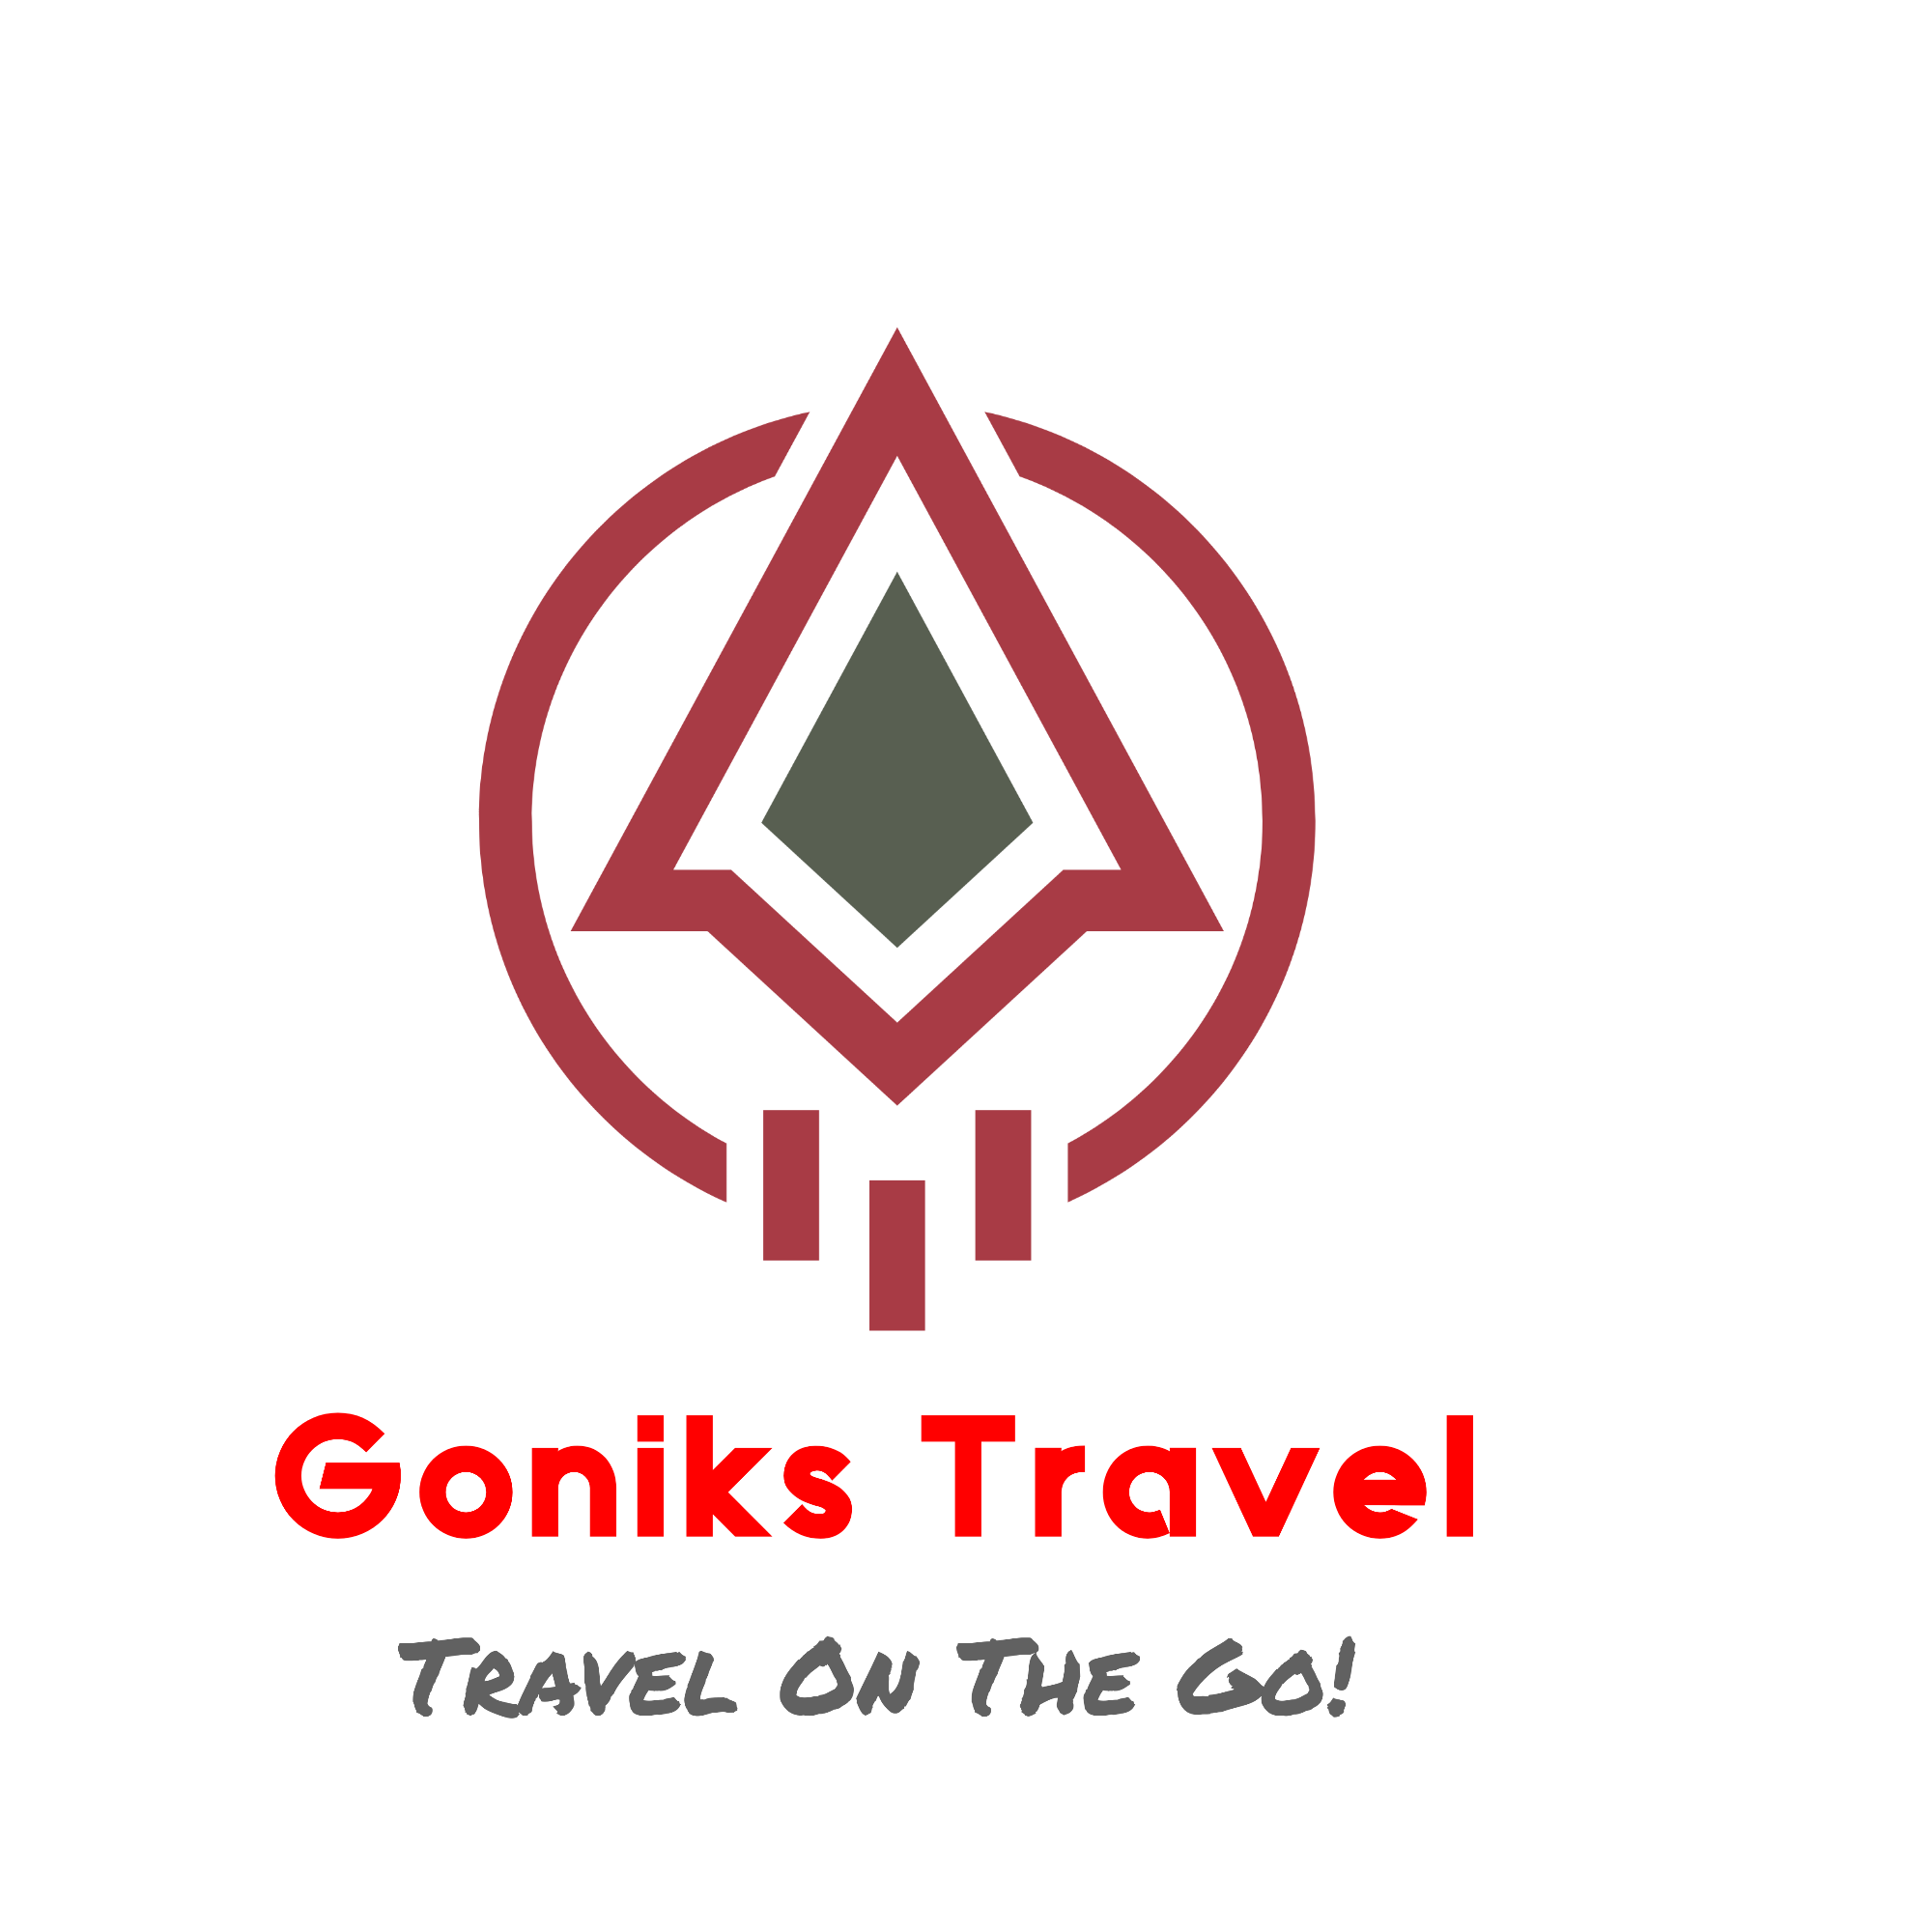 Goniks Travel